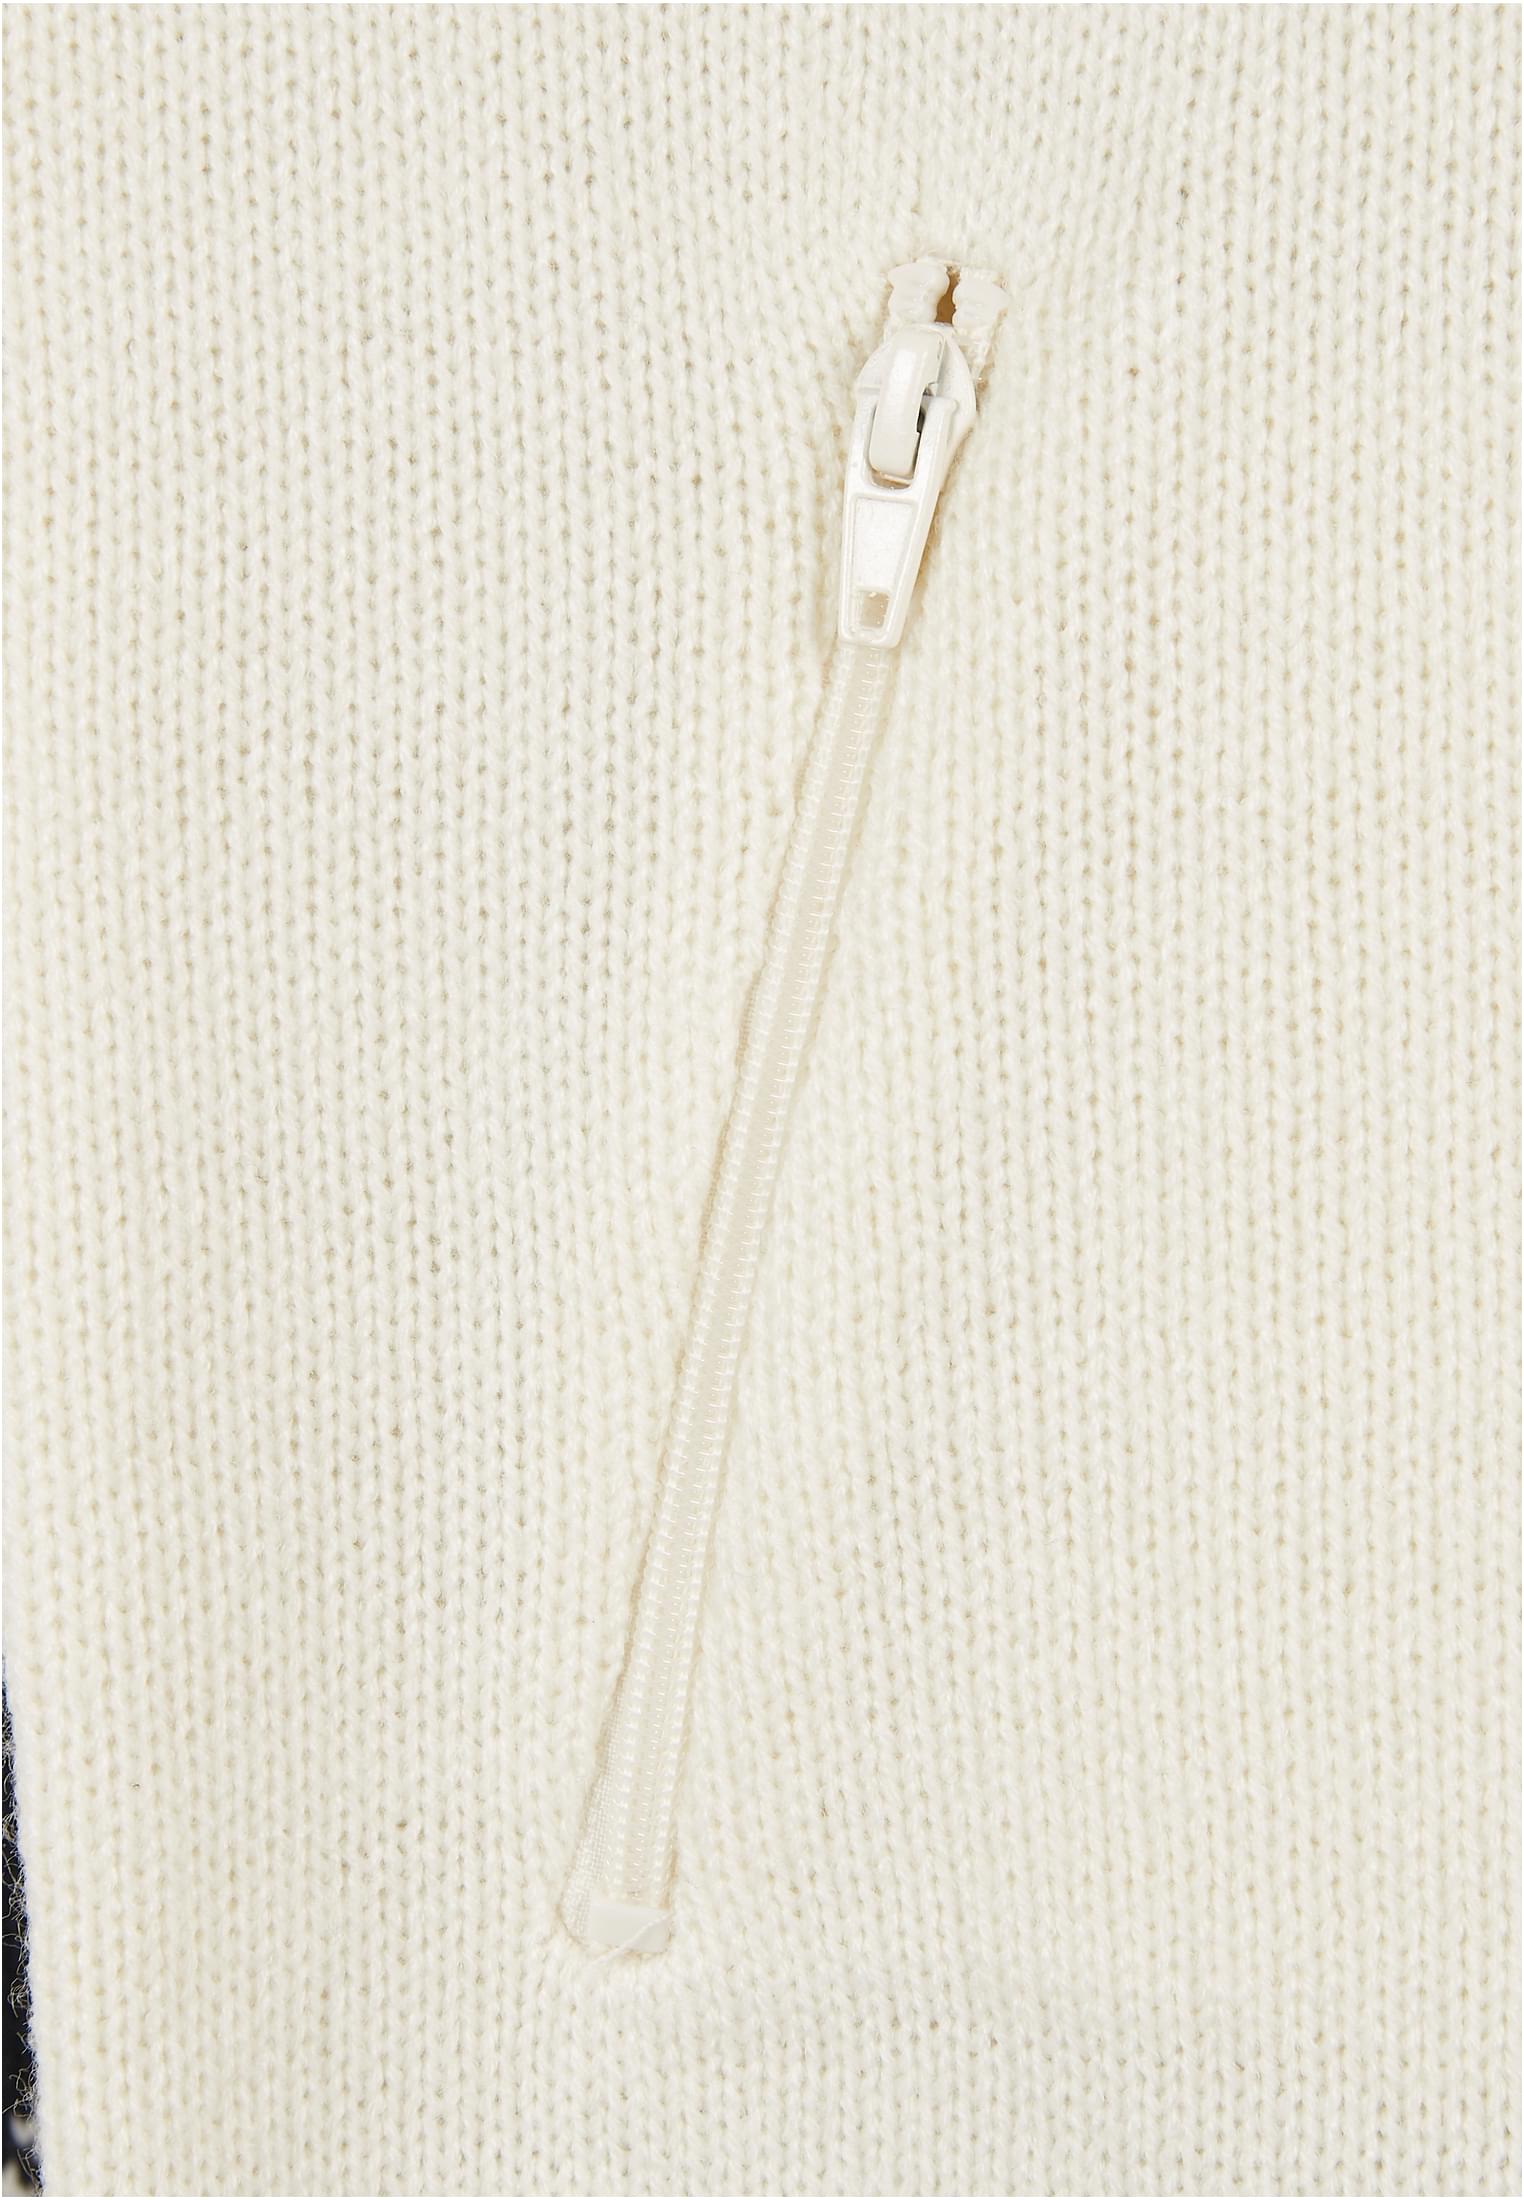 Pullover Cardigan Norweger in Farbe white